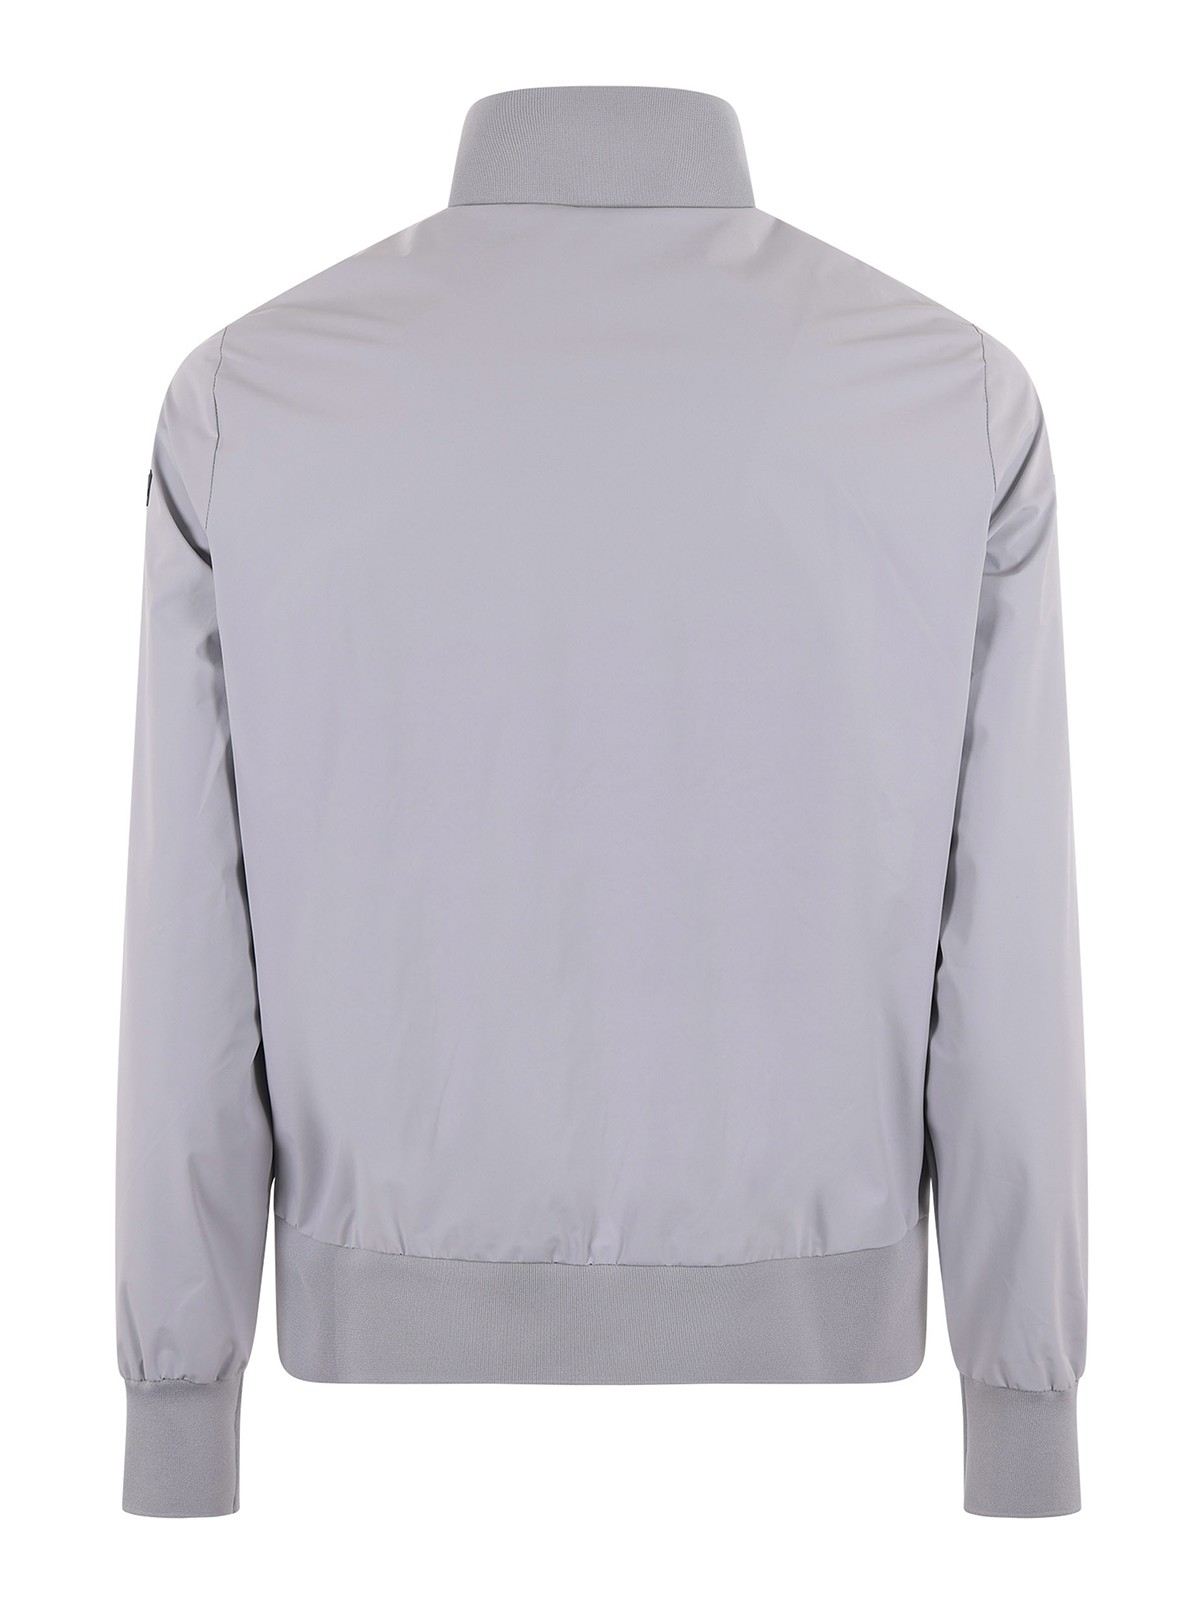 Shop Rrd Roberto Ricci Designs Rrd Jacket In Light Grey